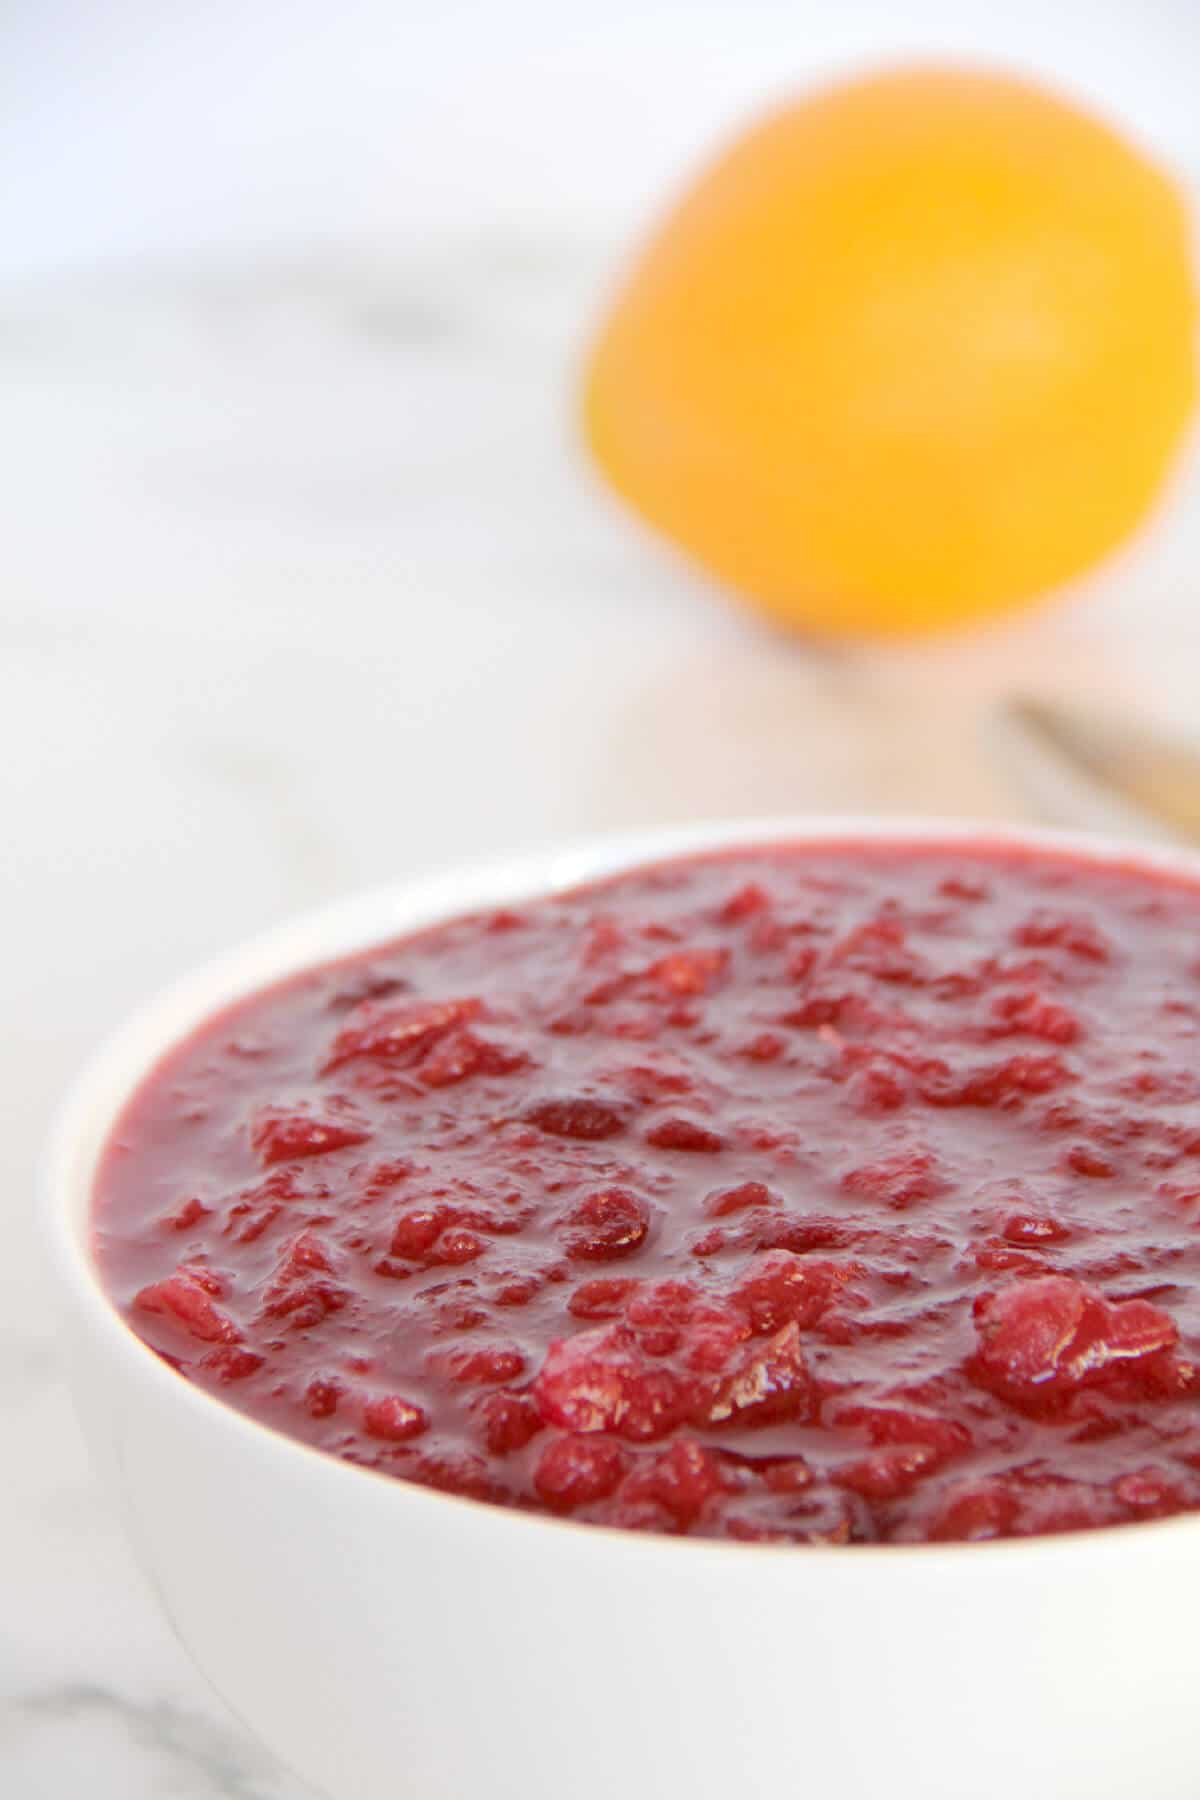 Cranberry sauce recipe using fresh cranberries, orange zest, pineapple, and a little horseradish.